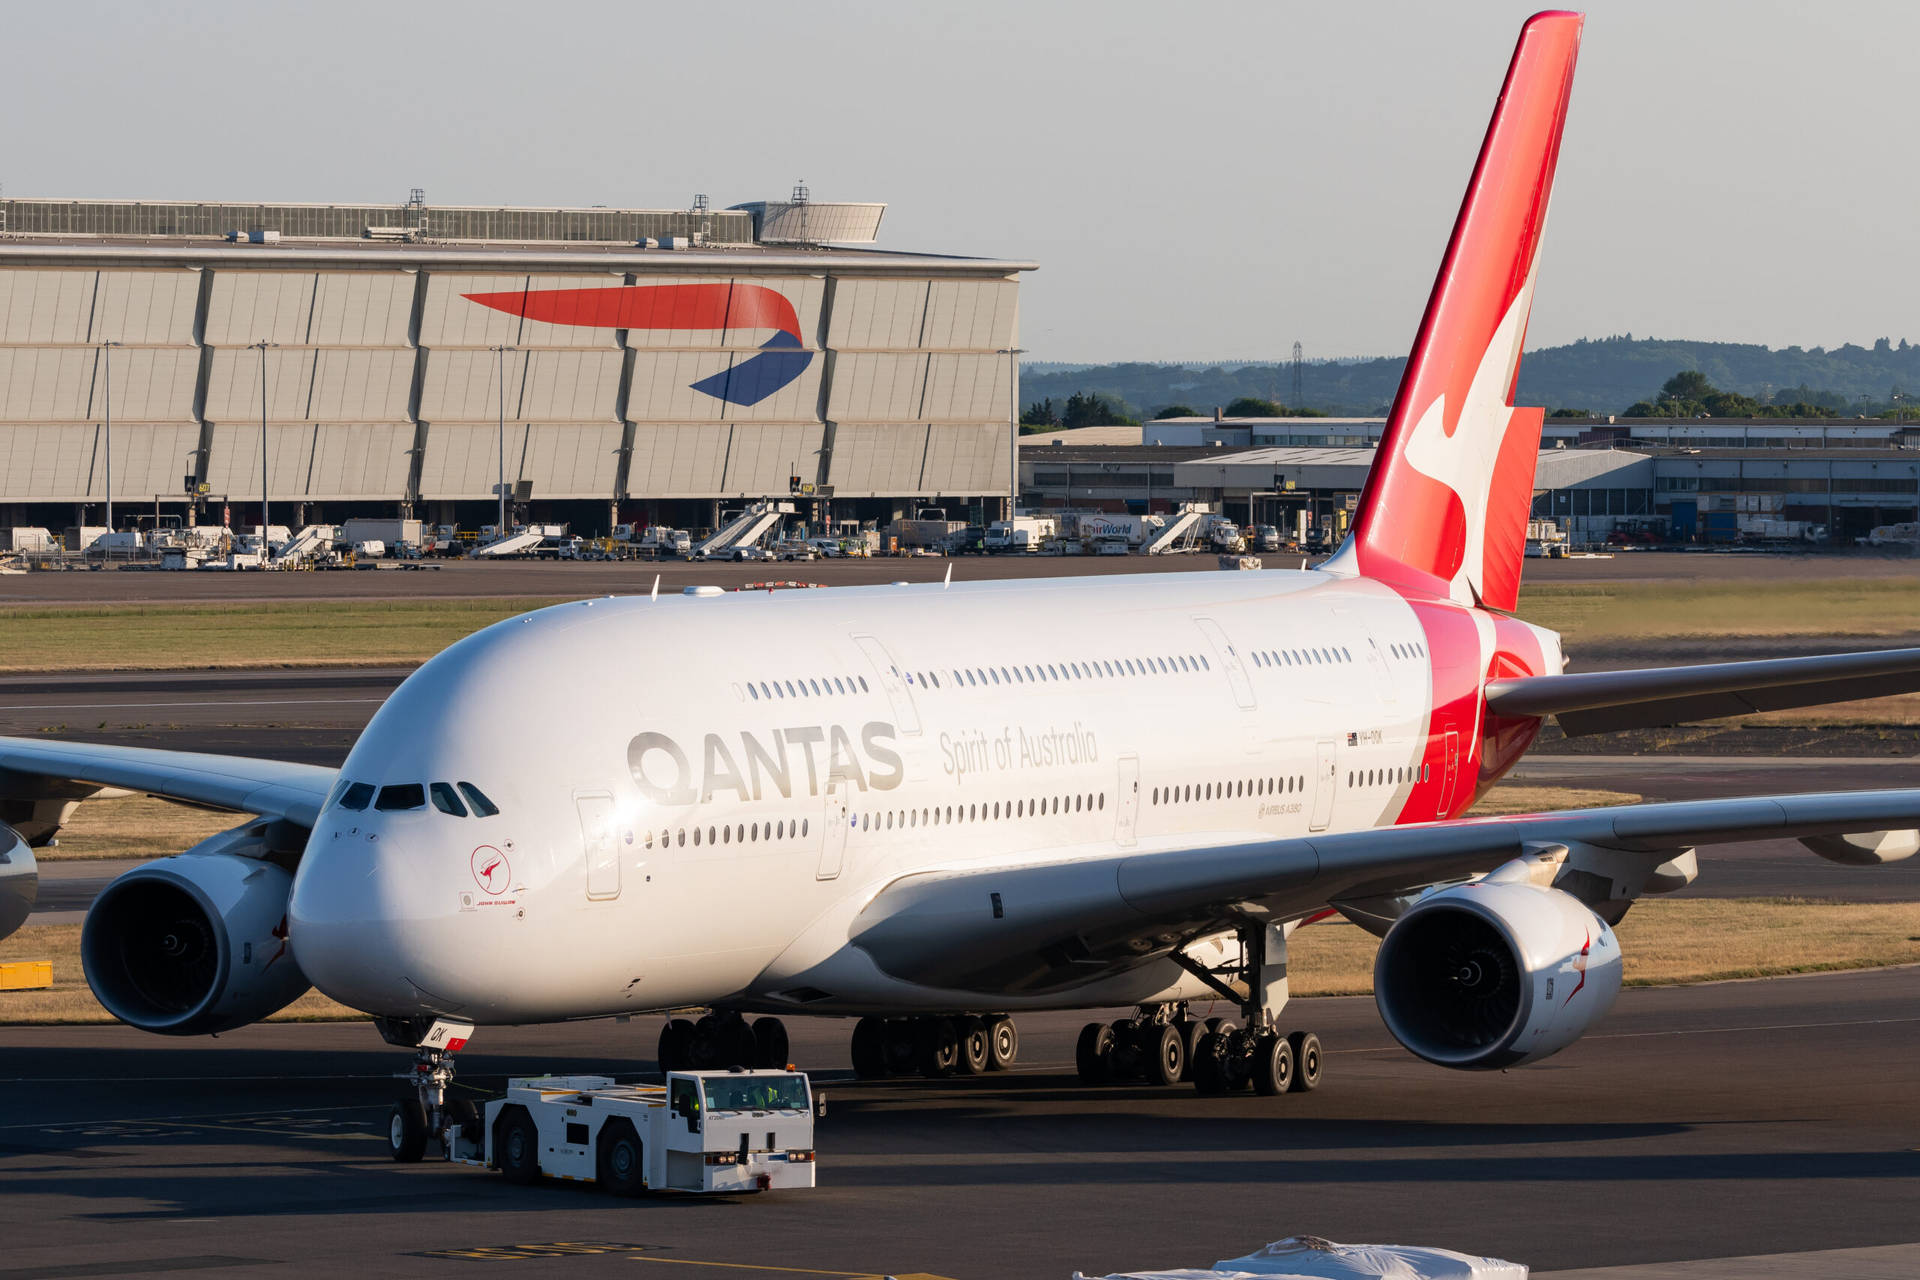 Qantasairbus A380 Wallpaper